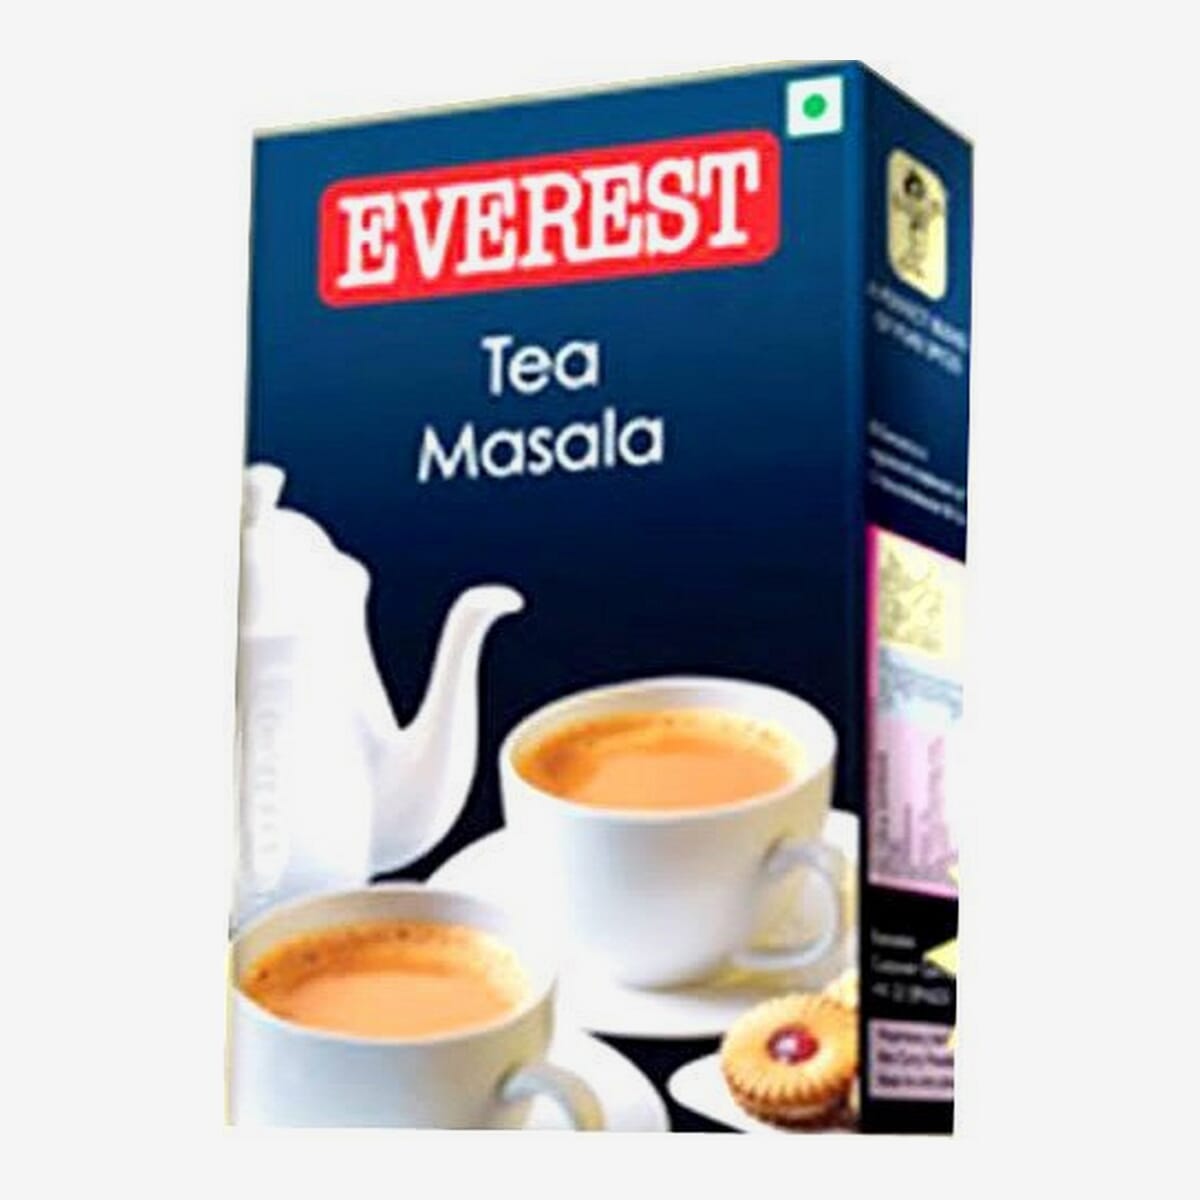 Everest Tea masala50g